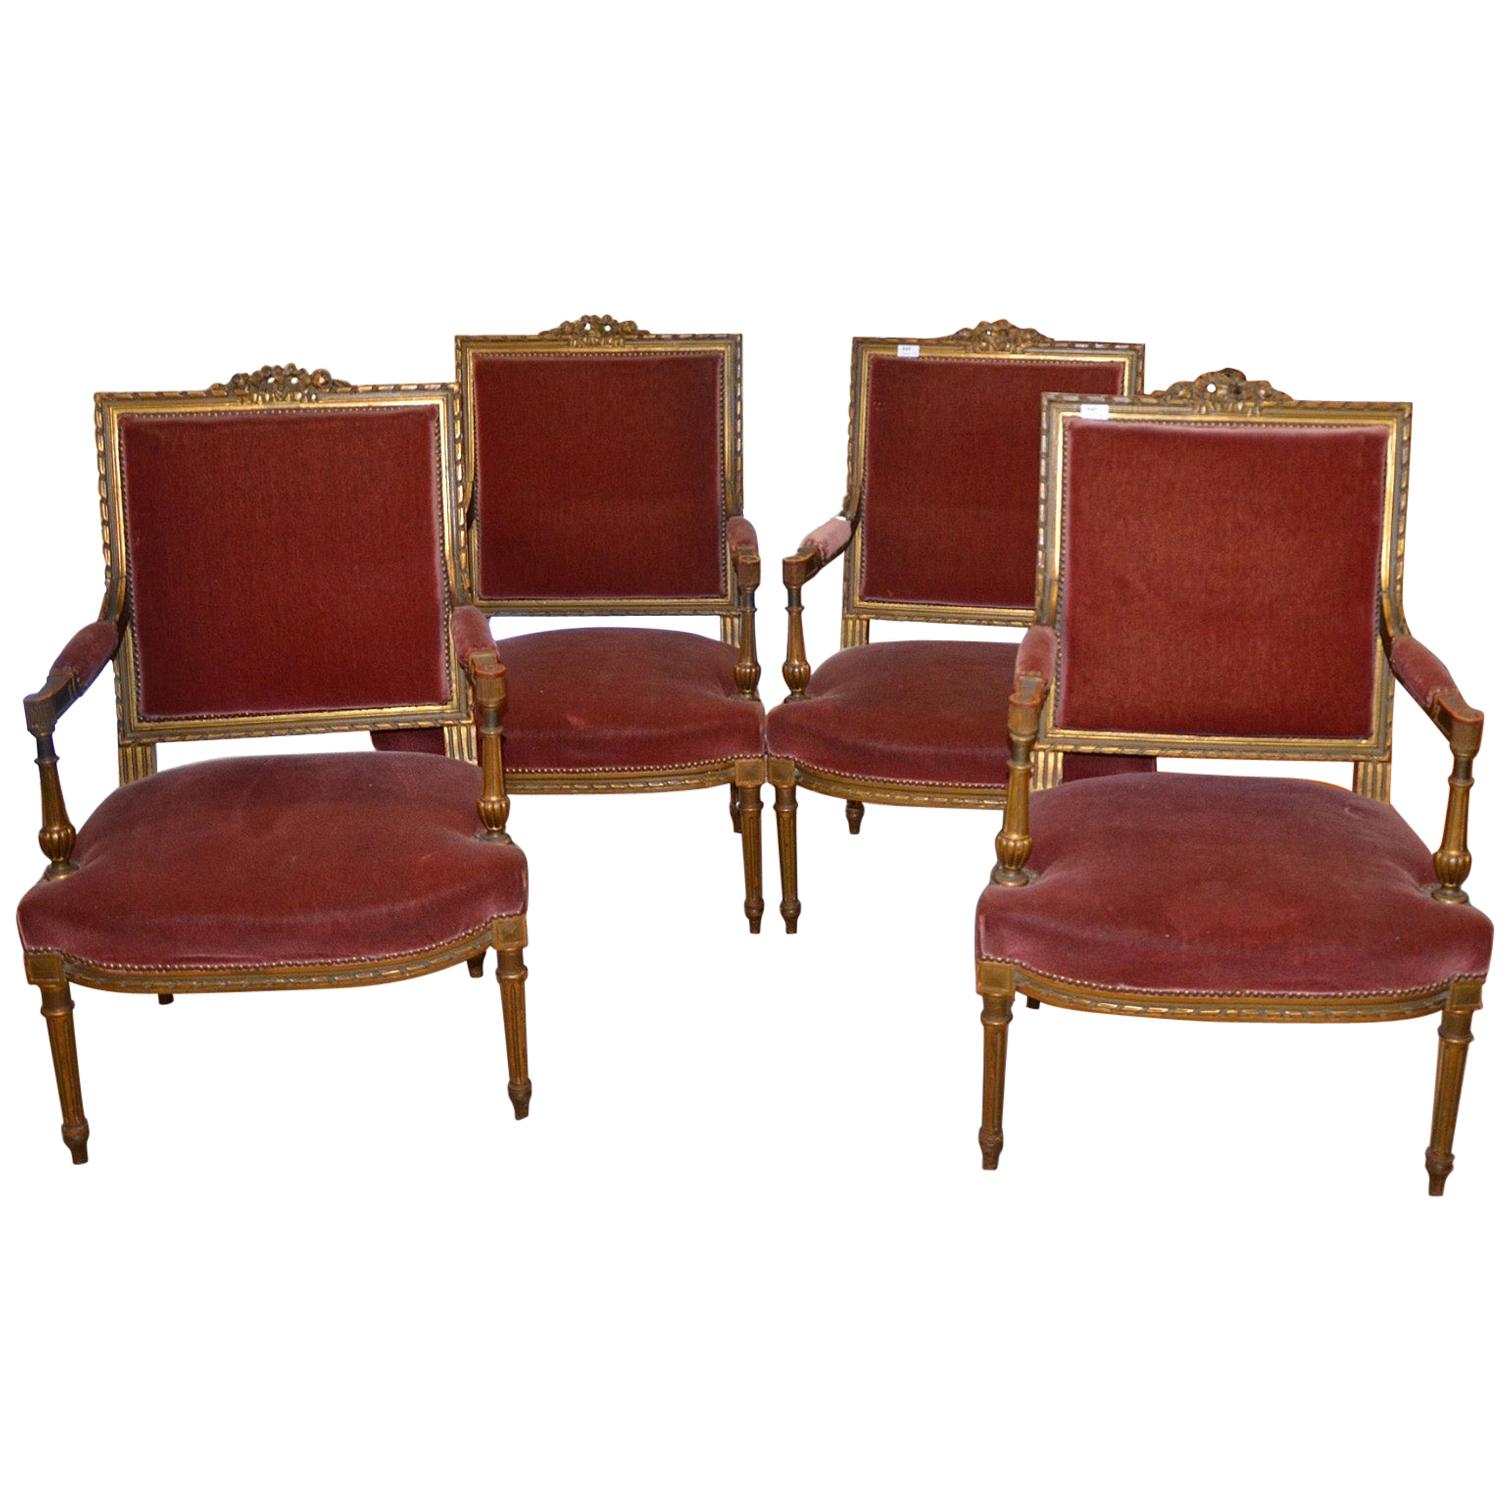 4 Stühle im Louis-XVI-Stil:: Periode Napoleon III:: teilweise vergoldet